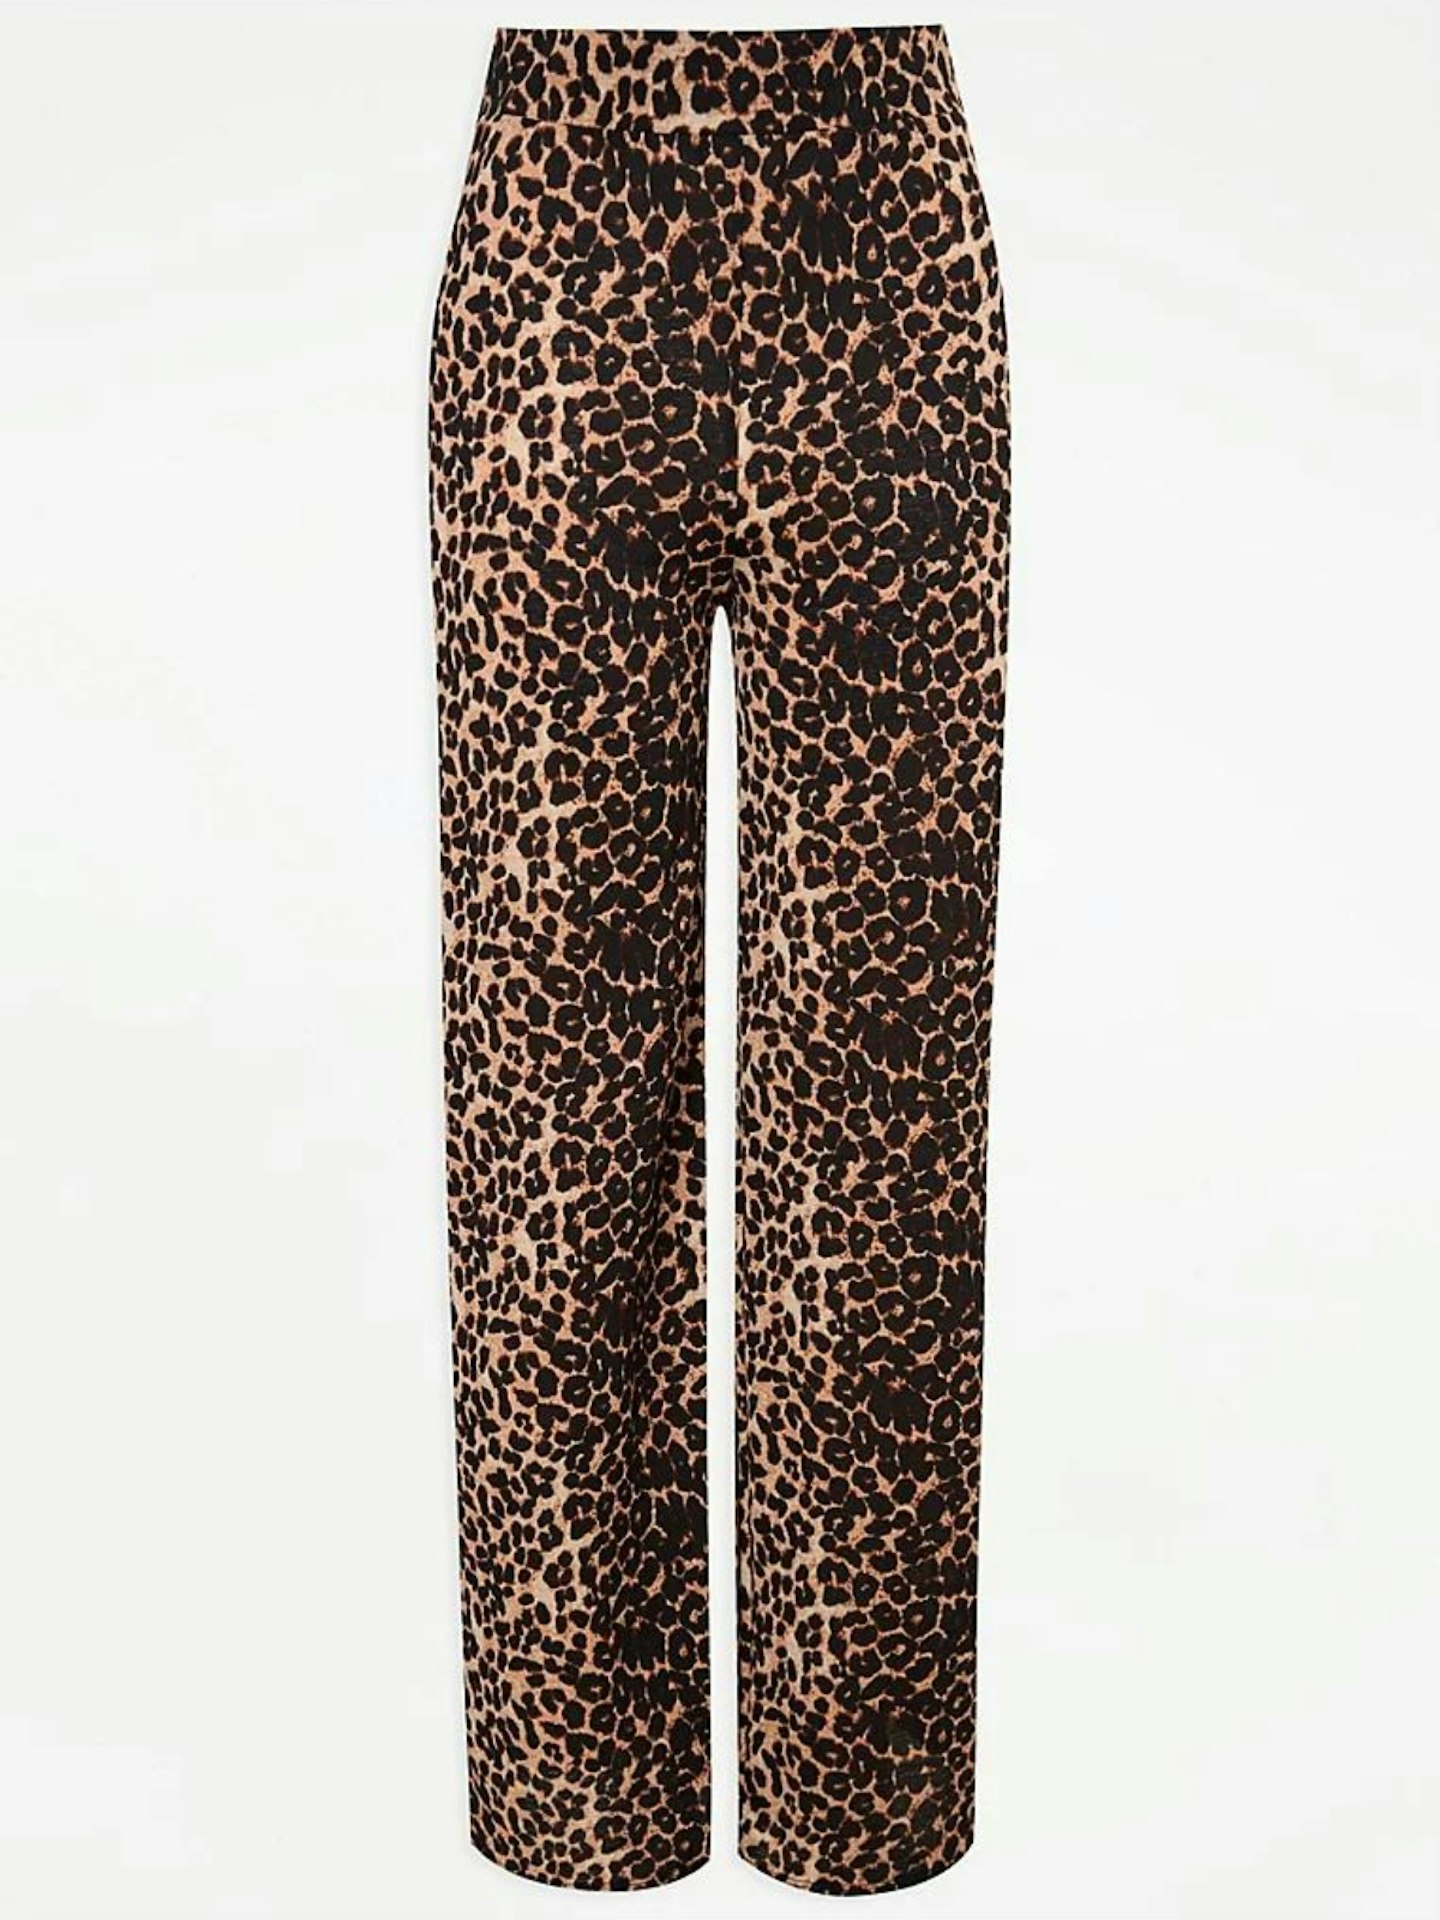 George At Asda Leopard Print Wide Leg Trousers